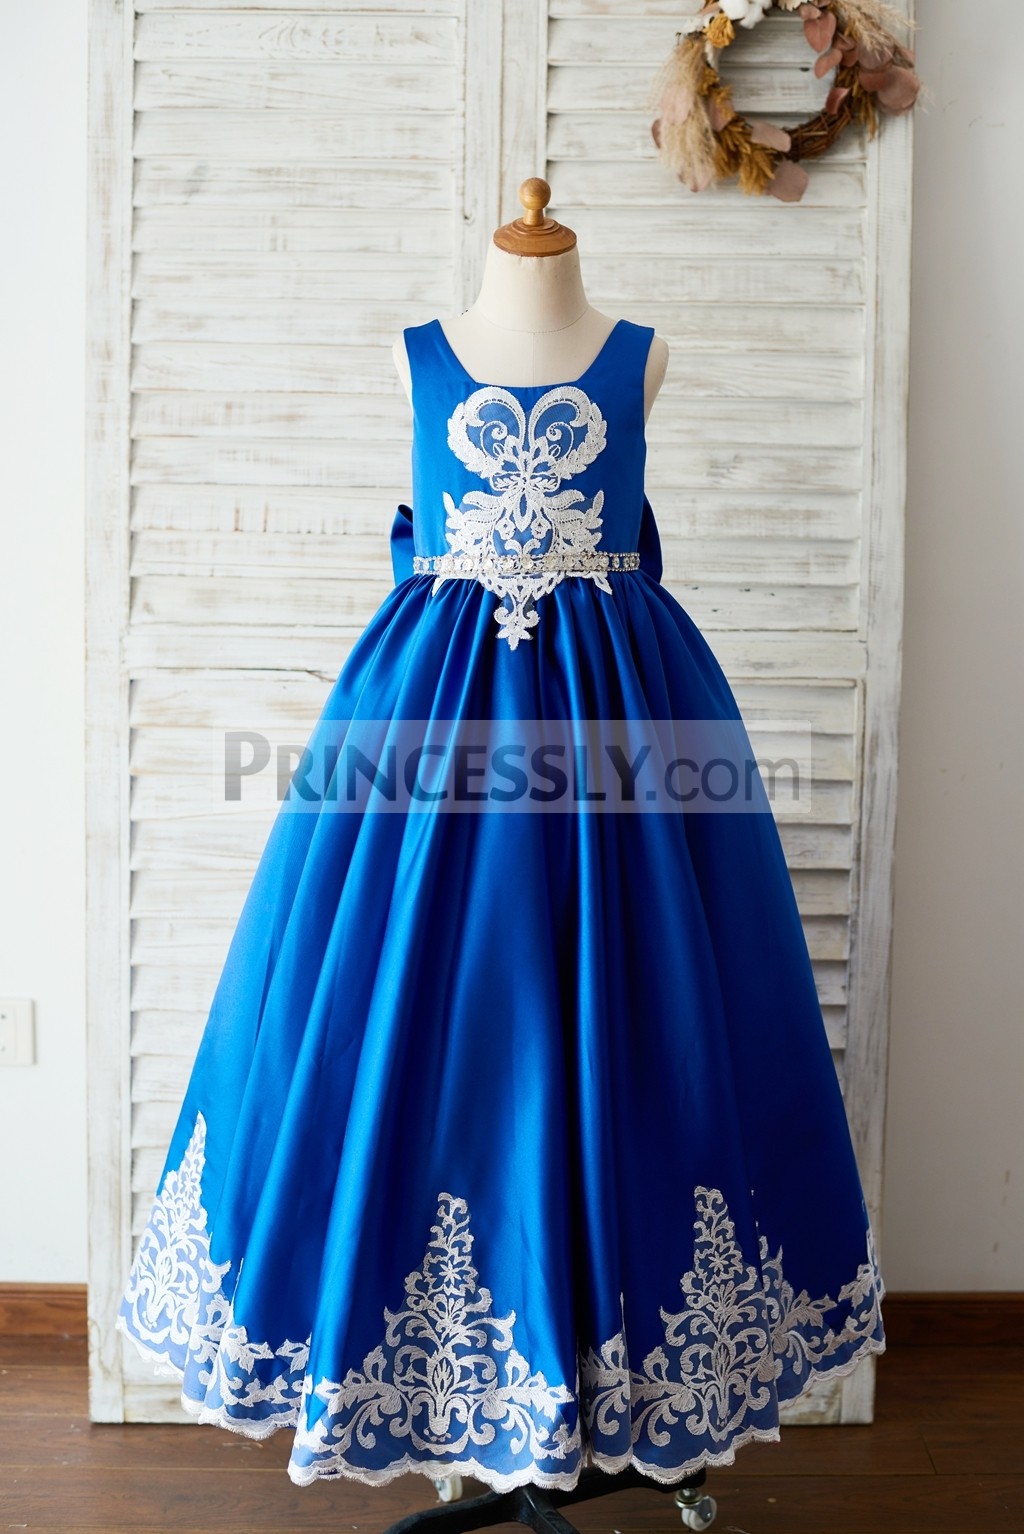 Royal blue satin long wedding flower girl gown w/ ivory lace trim